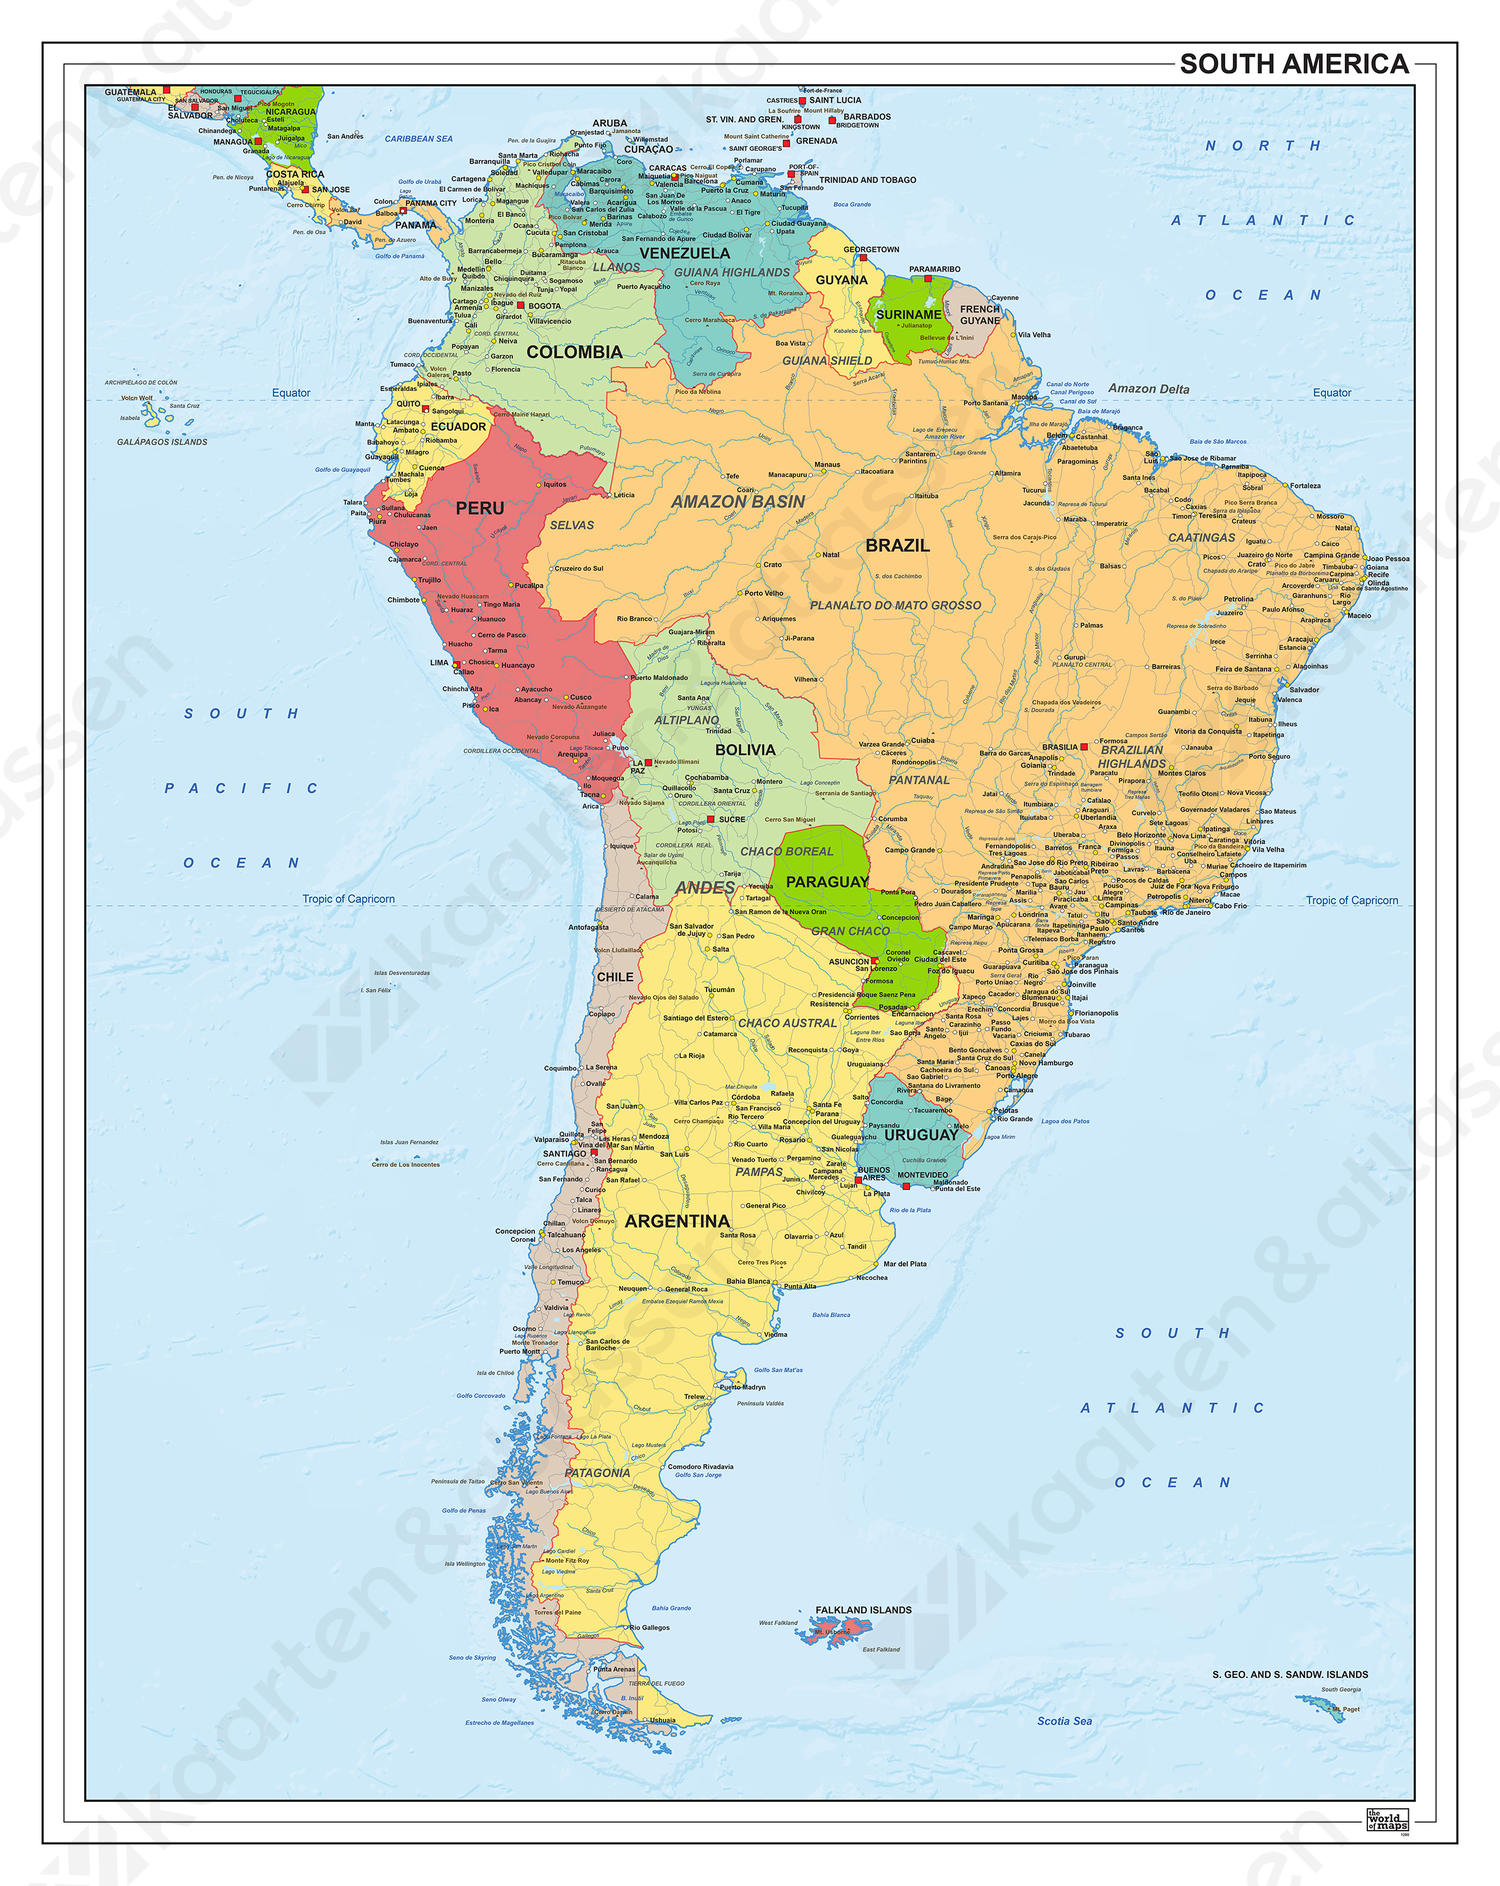 Zuid-Amerika staatkundig 1280